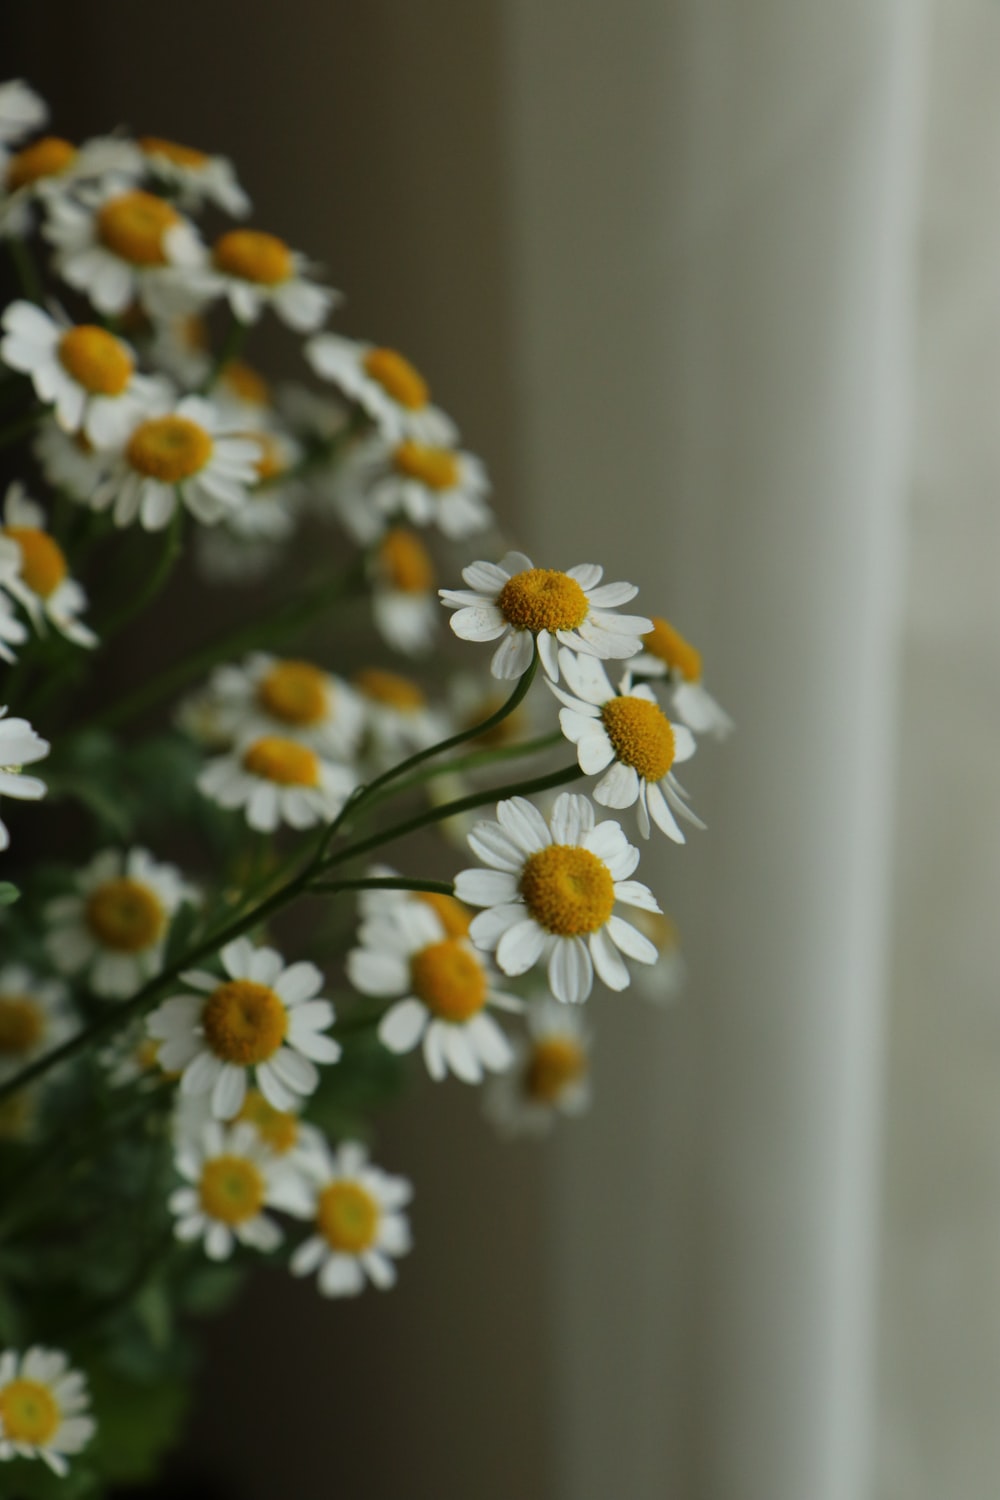 white and yellow daisy flowers photo